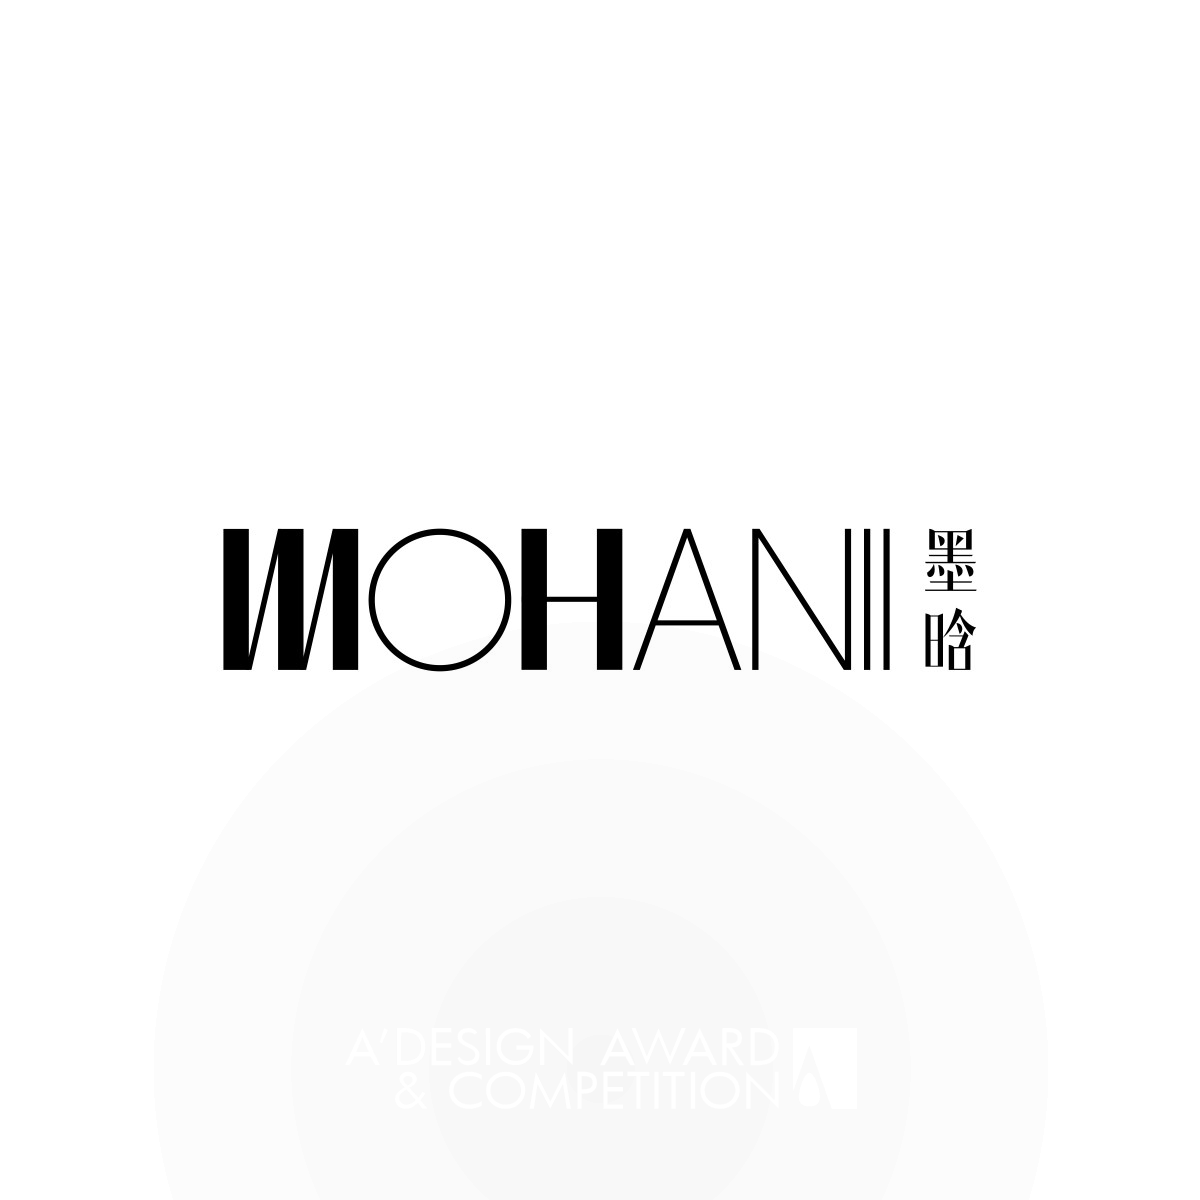 Mohanii